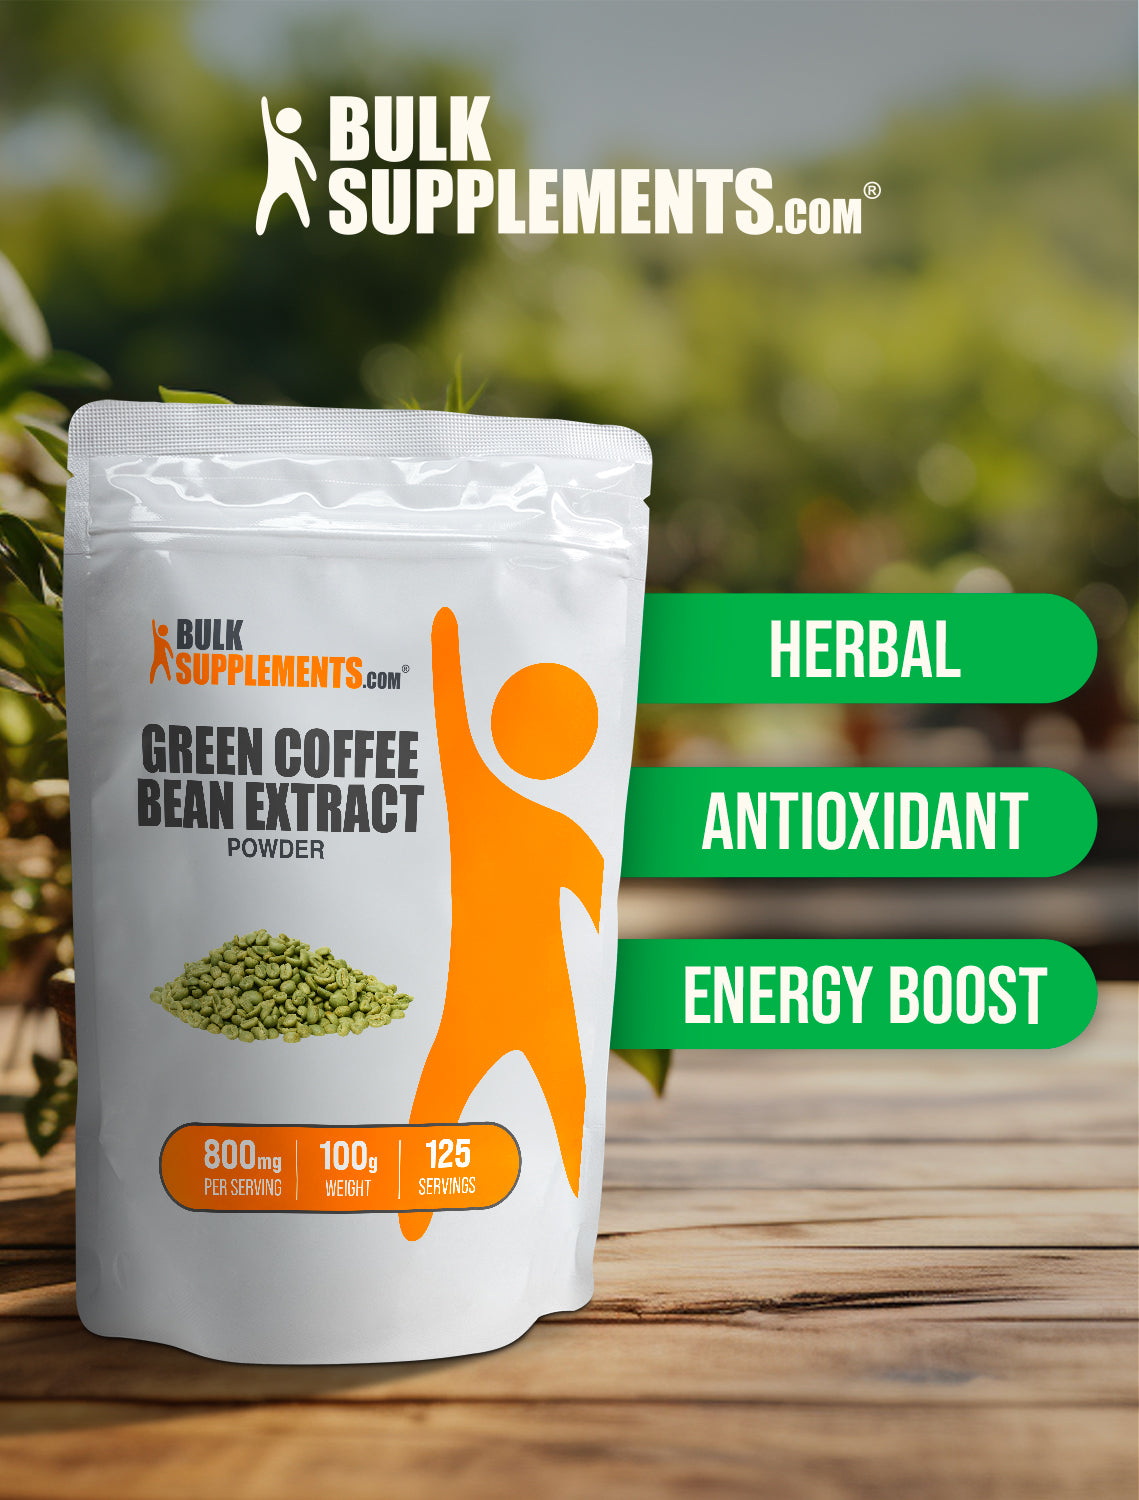 Green Coffee Bean extract powder keyword image 100g